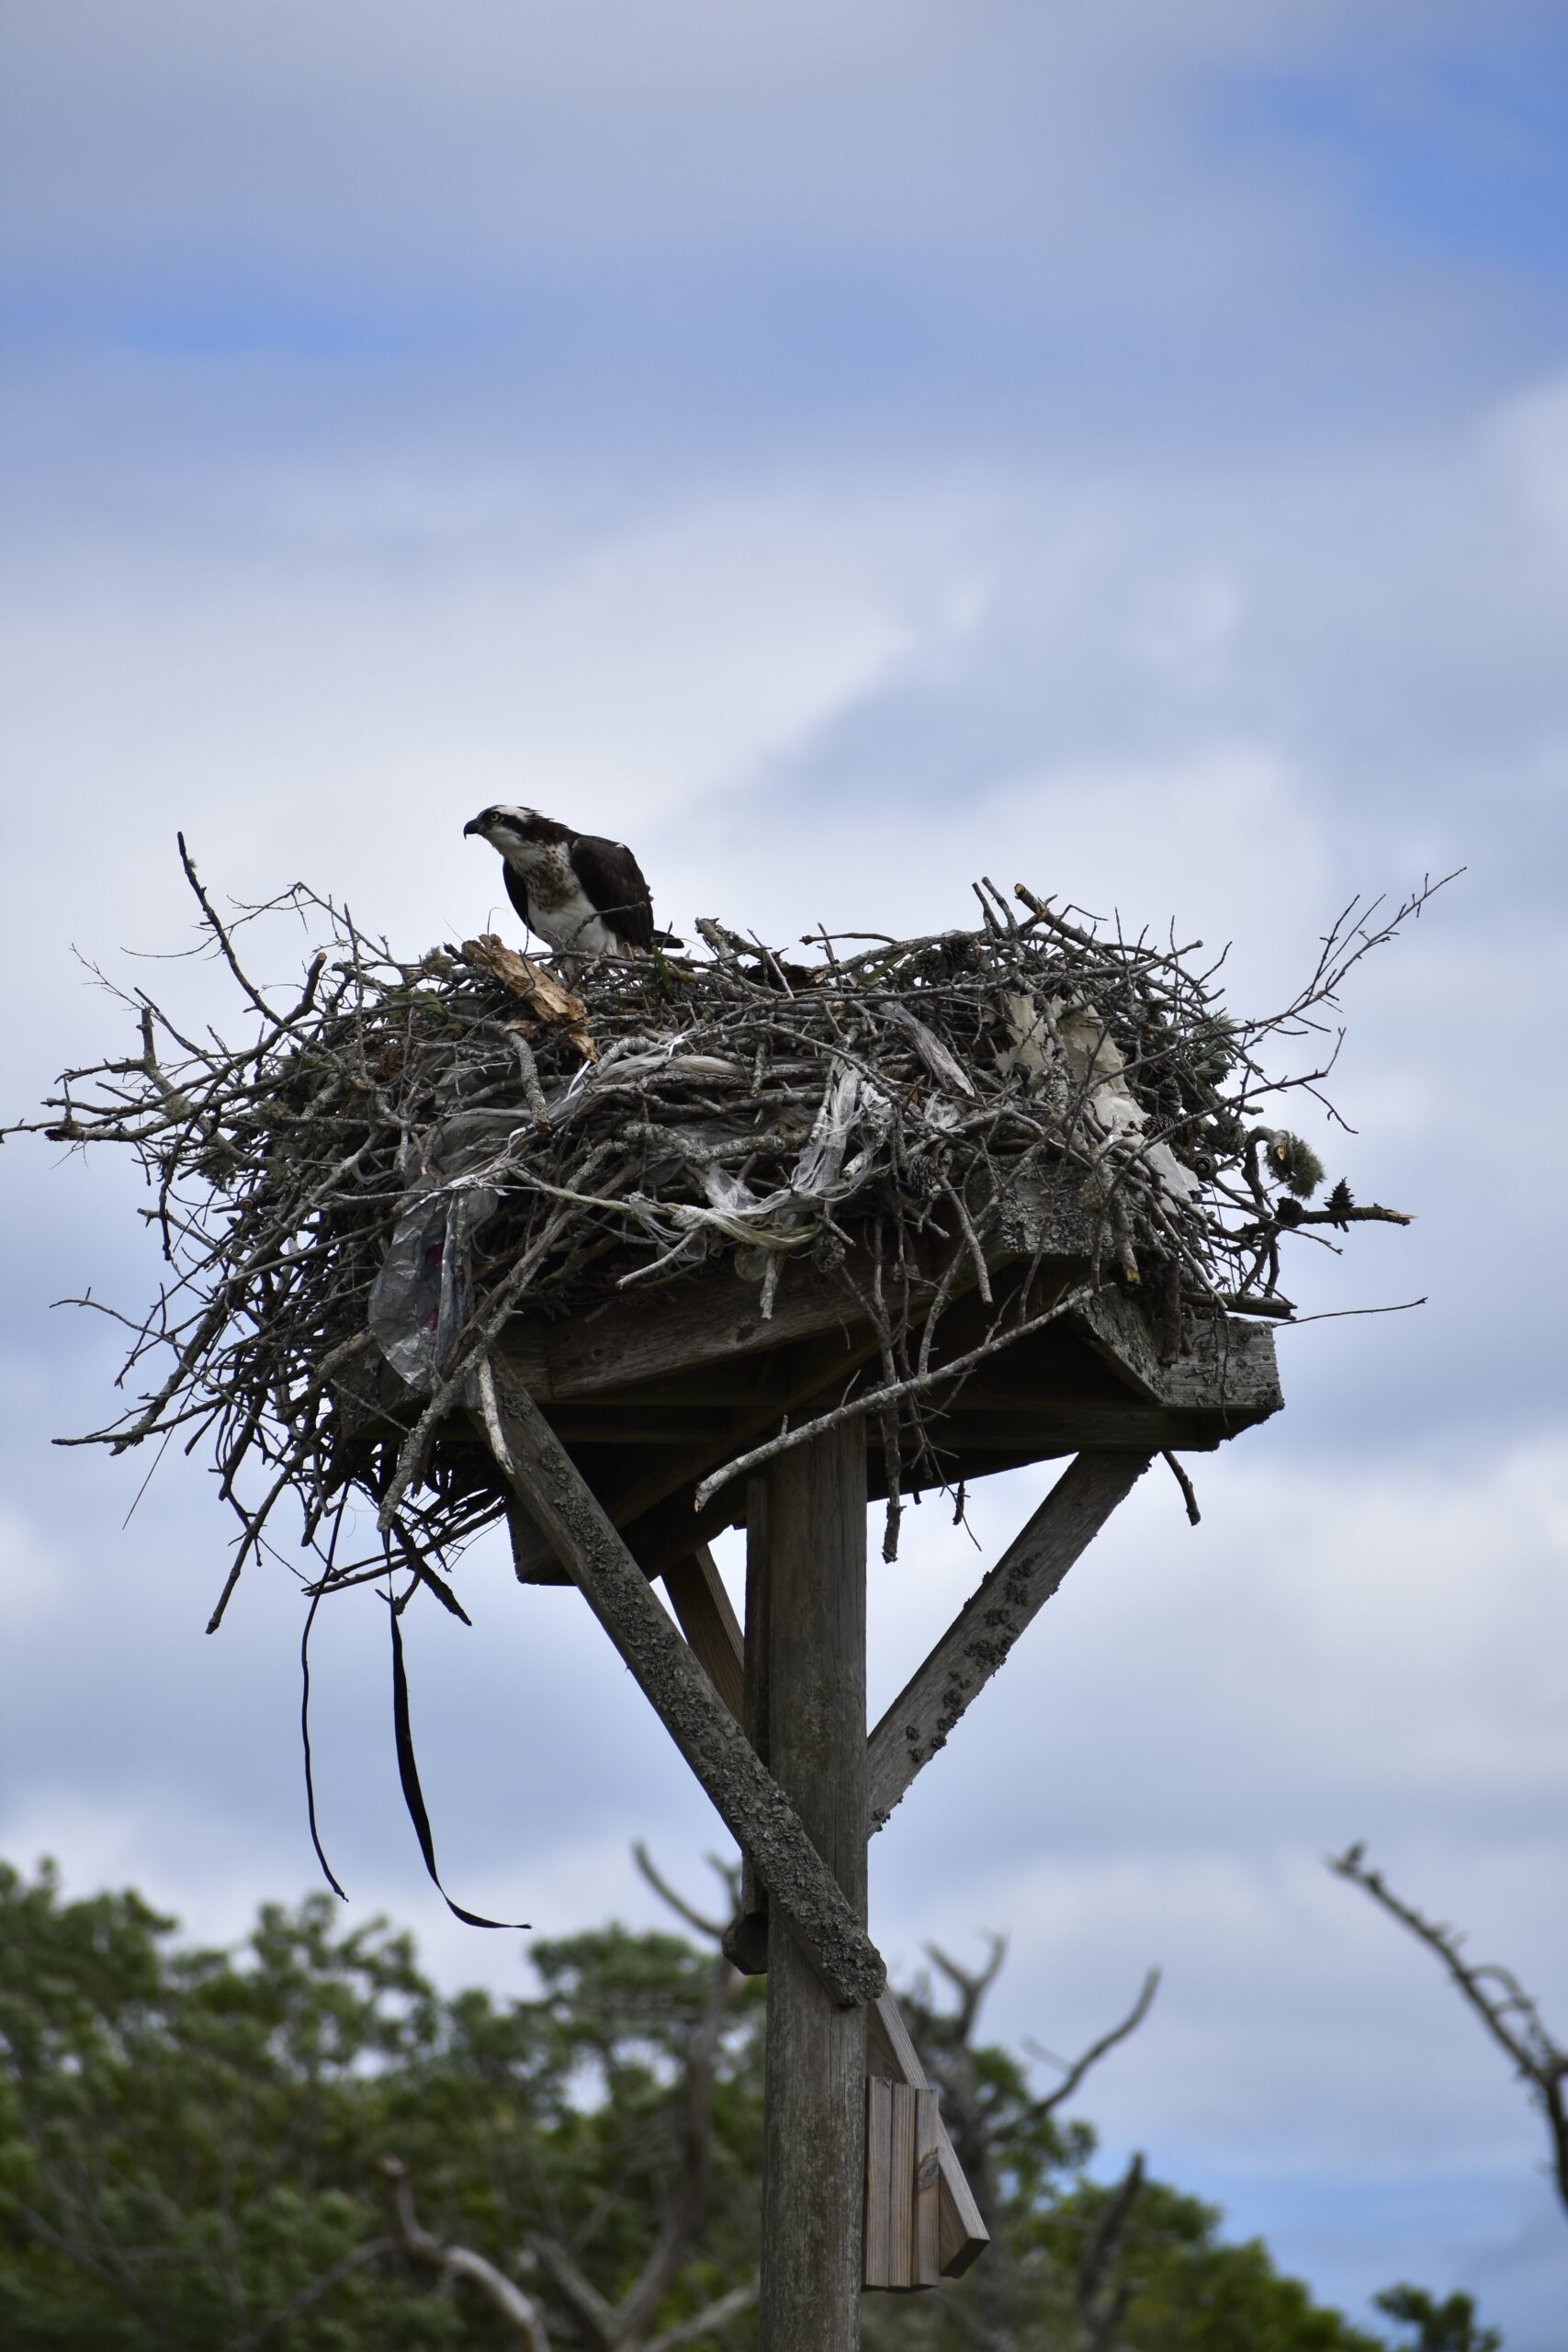 Osprey nest at Quogue Wildlife Refuge in June.